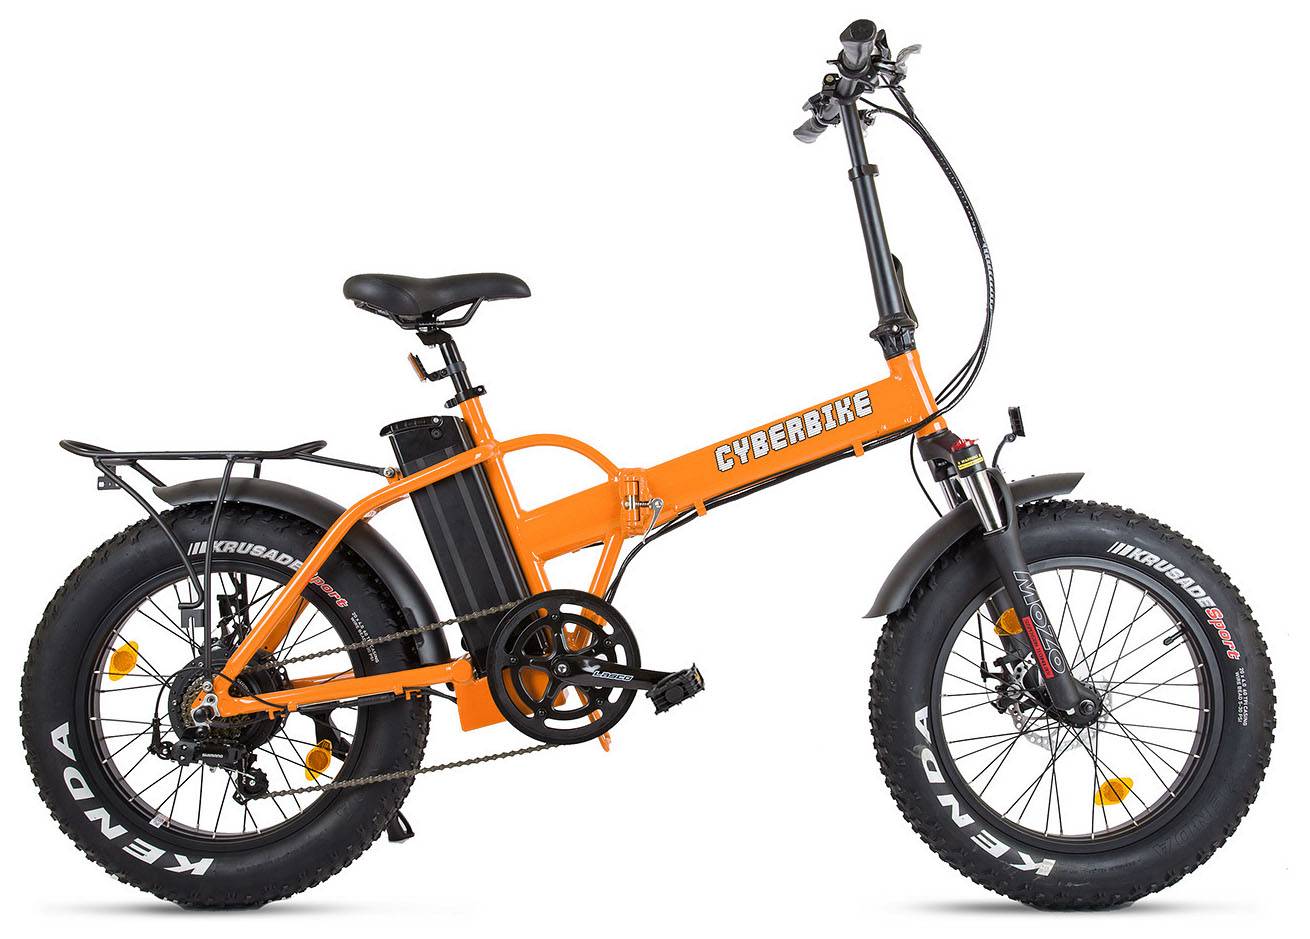  Отзывы о Электровелосипеде Eltreco Cyberbike Fat 500W 2018